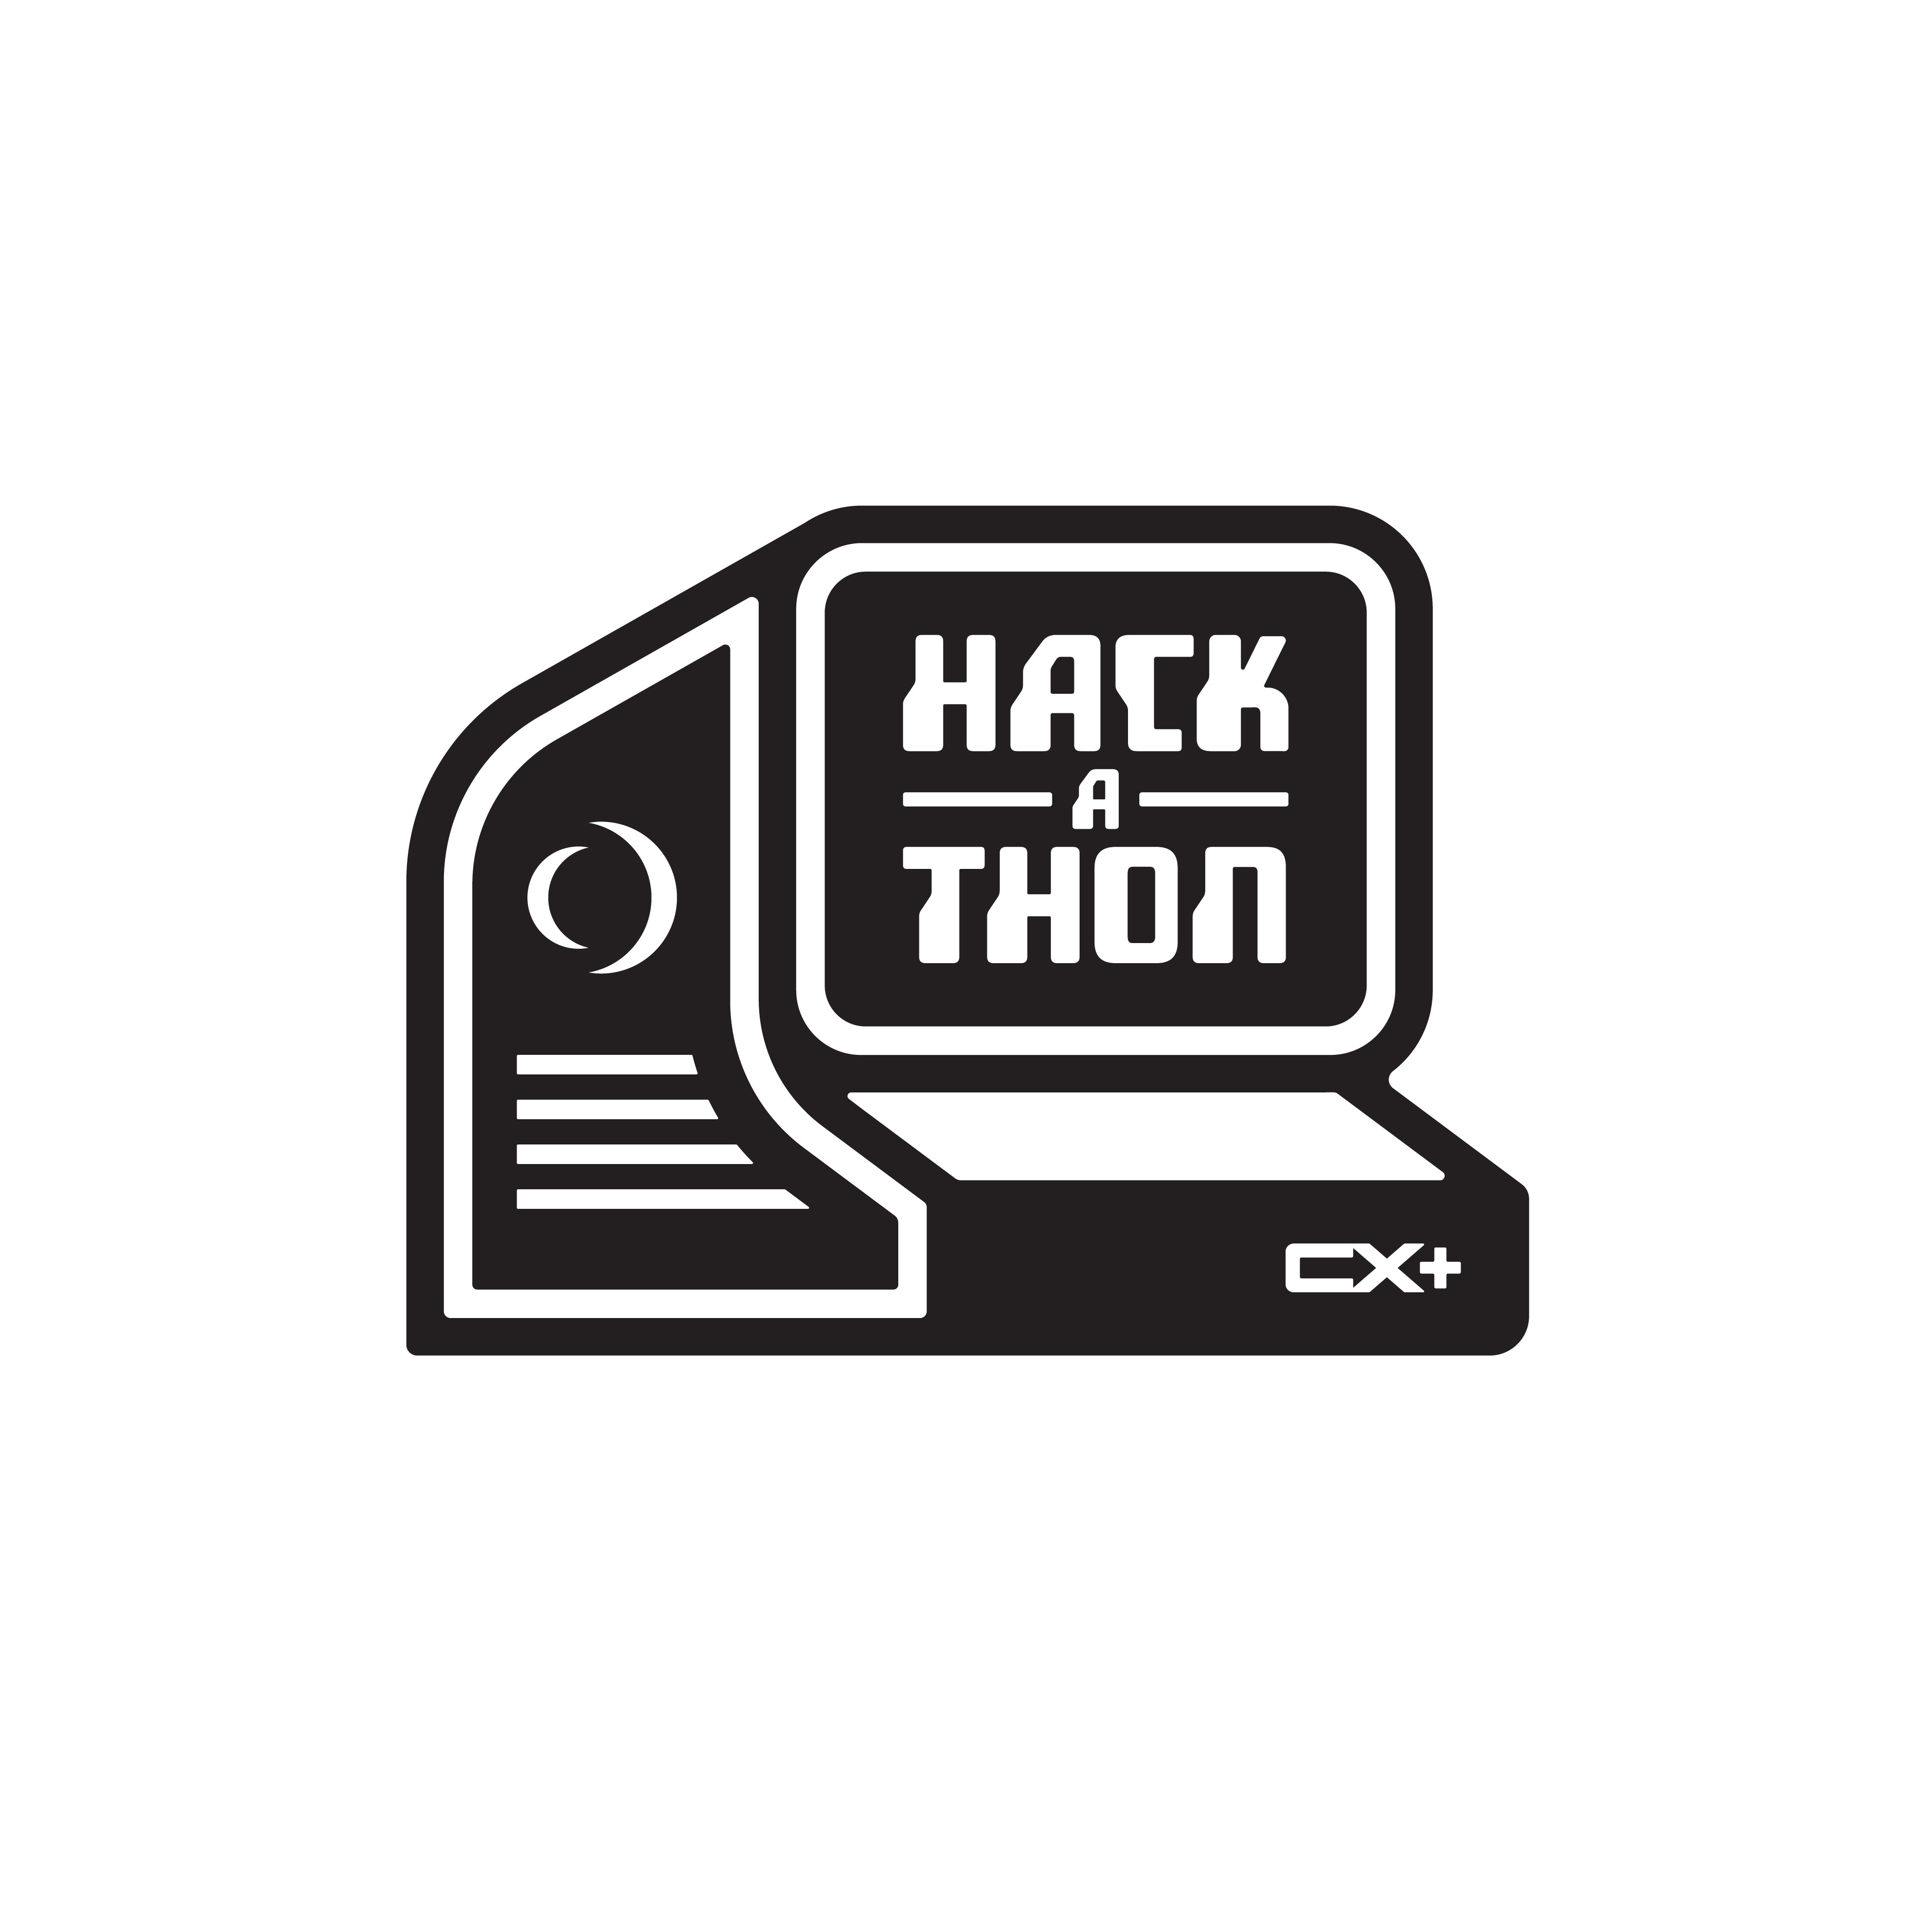 Hackathon Logo logo design by logo designer Matt Dawson for your inspiration and for the worlds largest logo competition